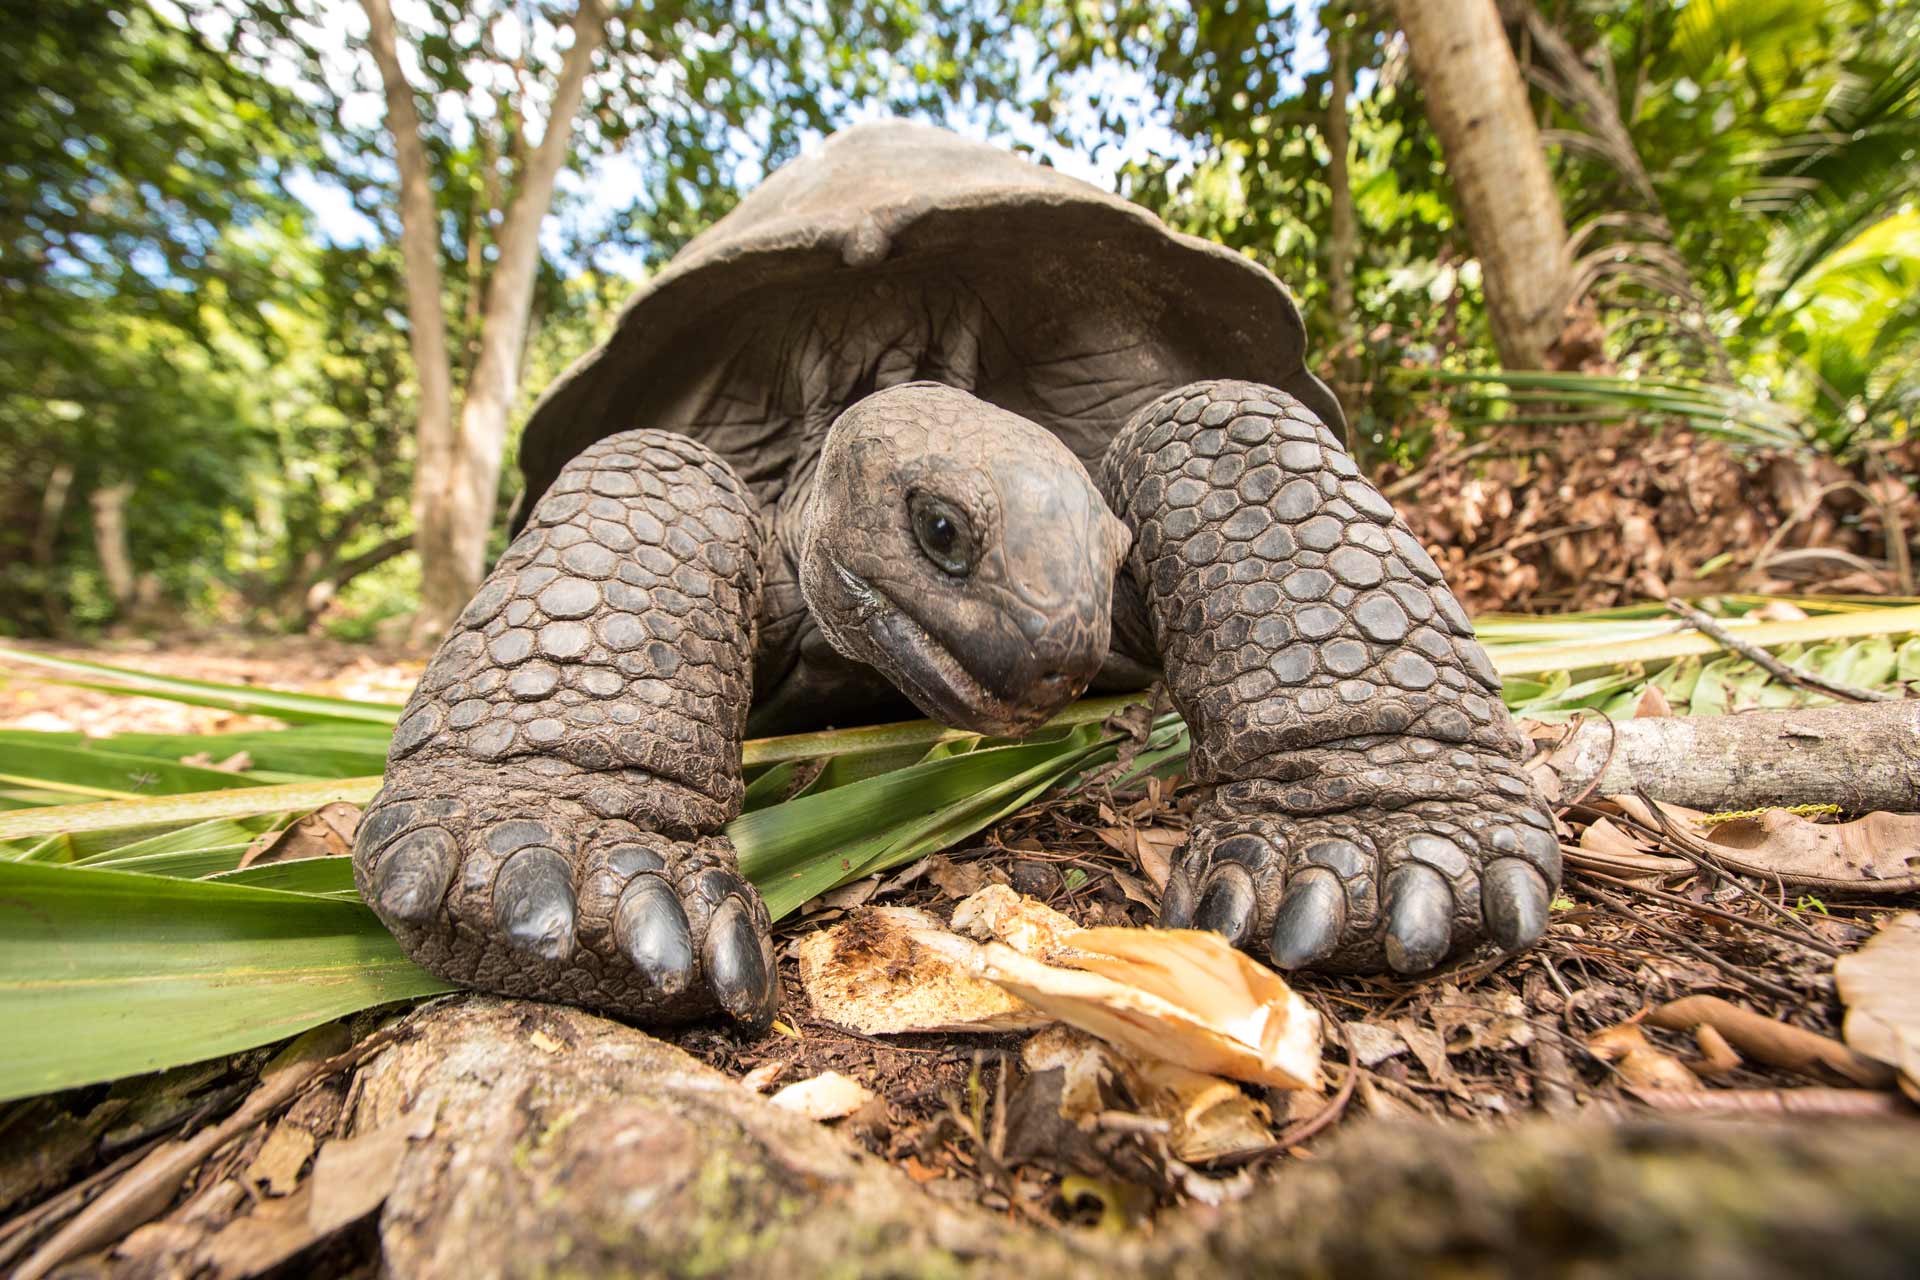 Giant Aldabra tortoise (Aldabrachelys gigantea) on Seychelles island